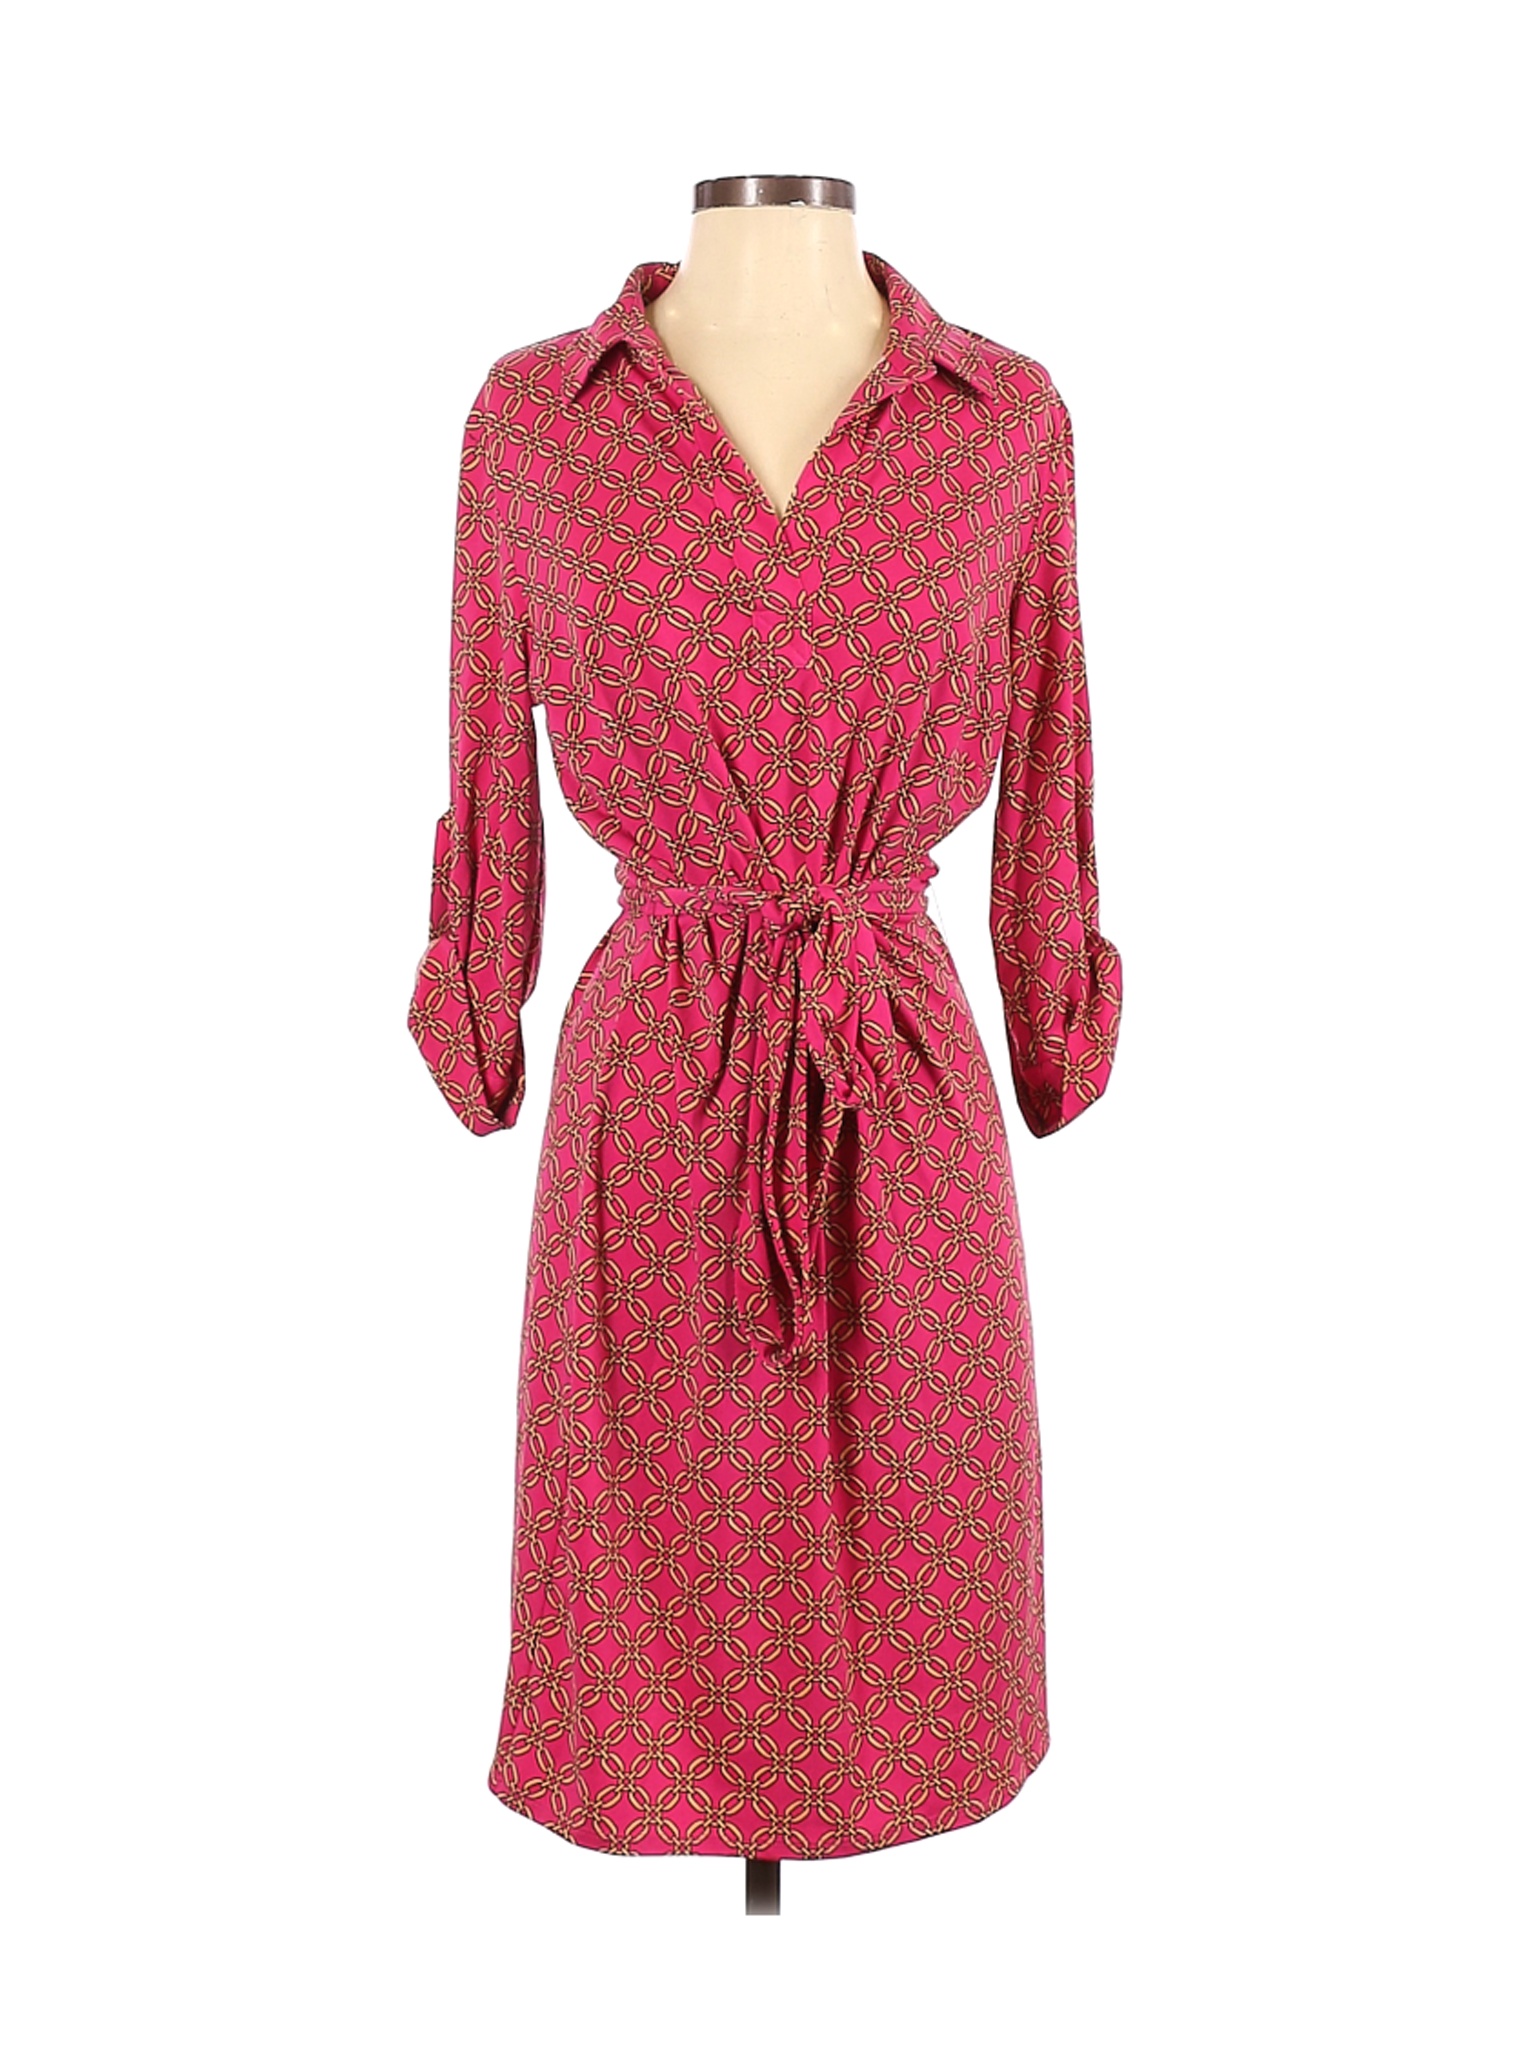 Laundry Women Pink Casual Dress S | eBay